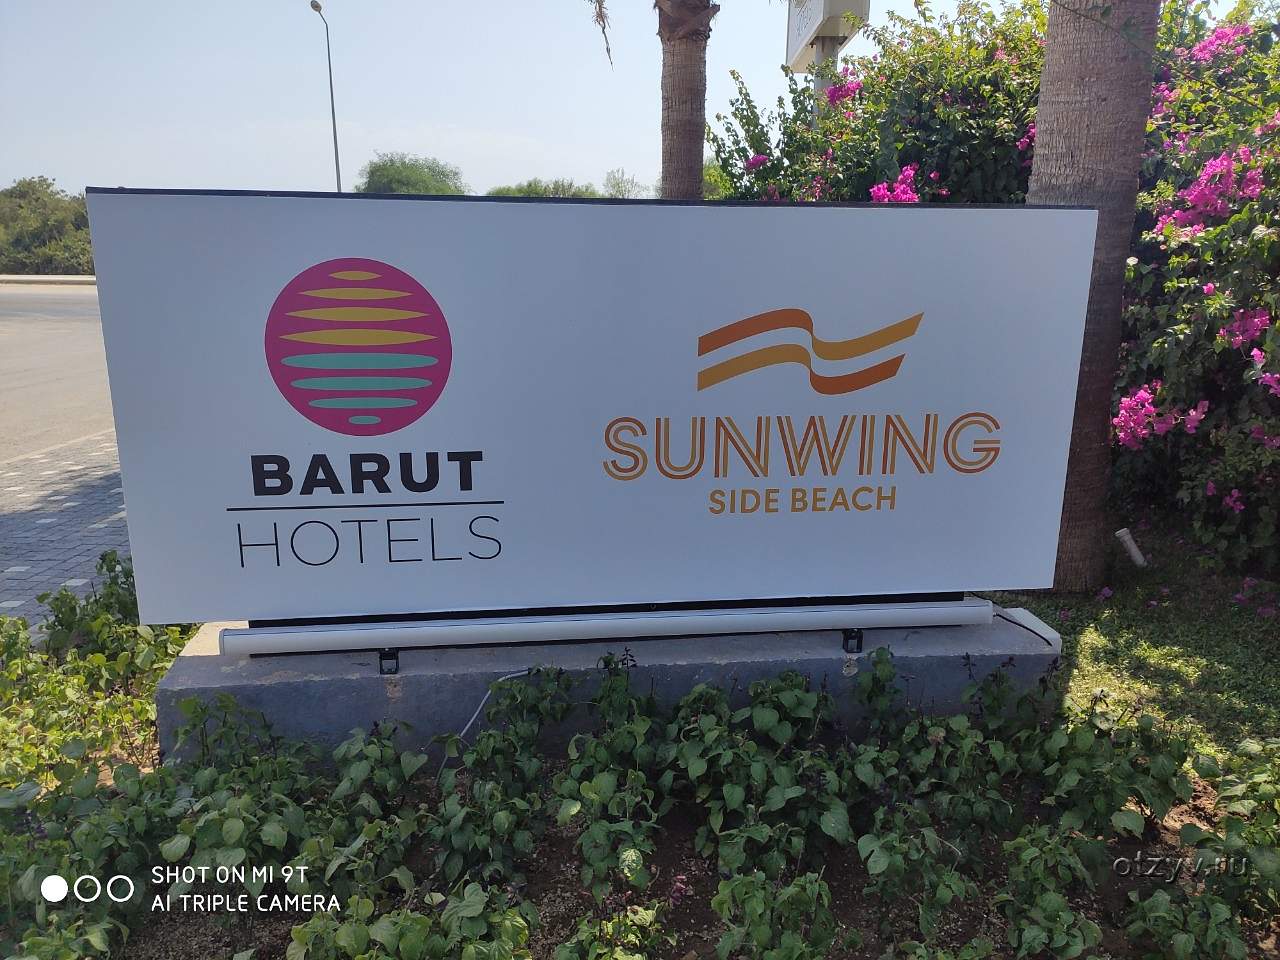 Barut side beach. Отель Barut Sunwing Side Beach 4. Barut Sunwing Side Beach на карте. Barut Sunwing Side Beach карта отеля. Барут Санвинг Сиде на карте.